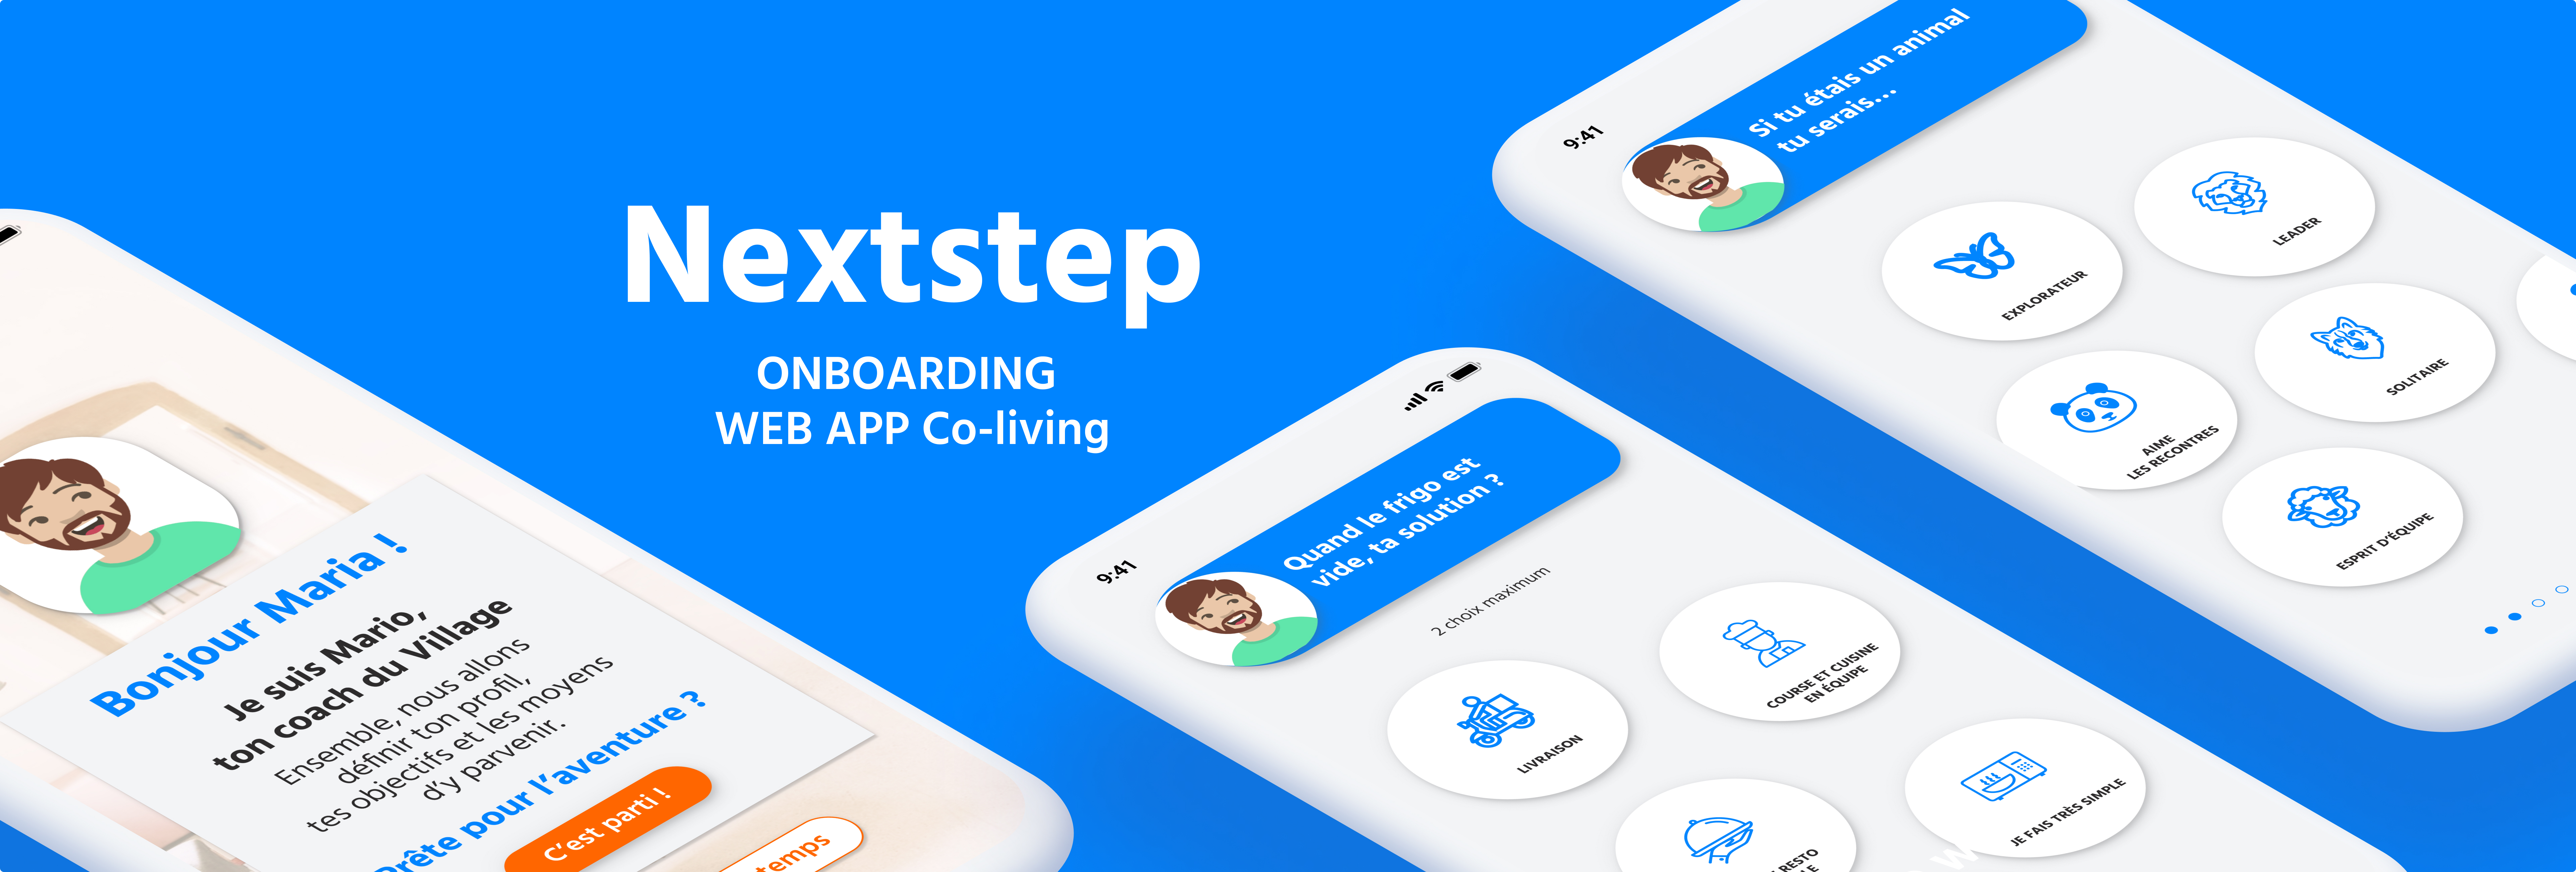 Next Steps - Onboarding Application Mobile 